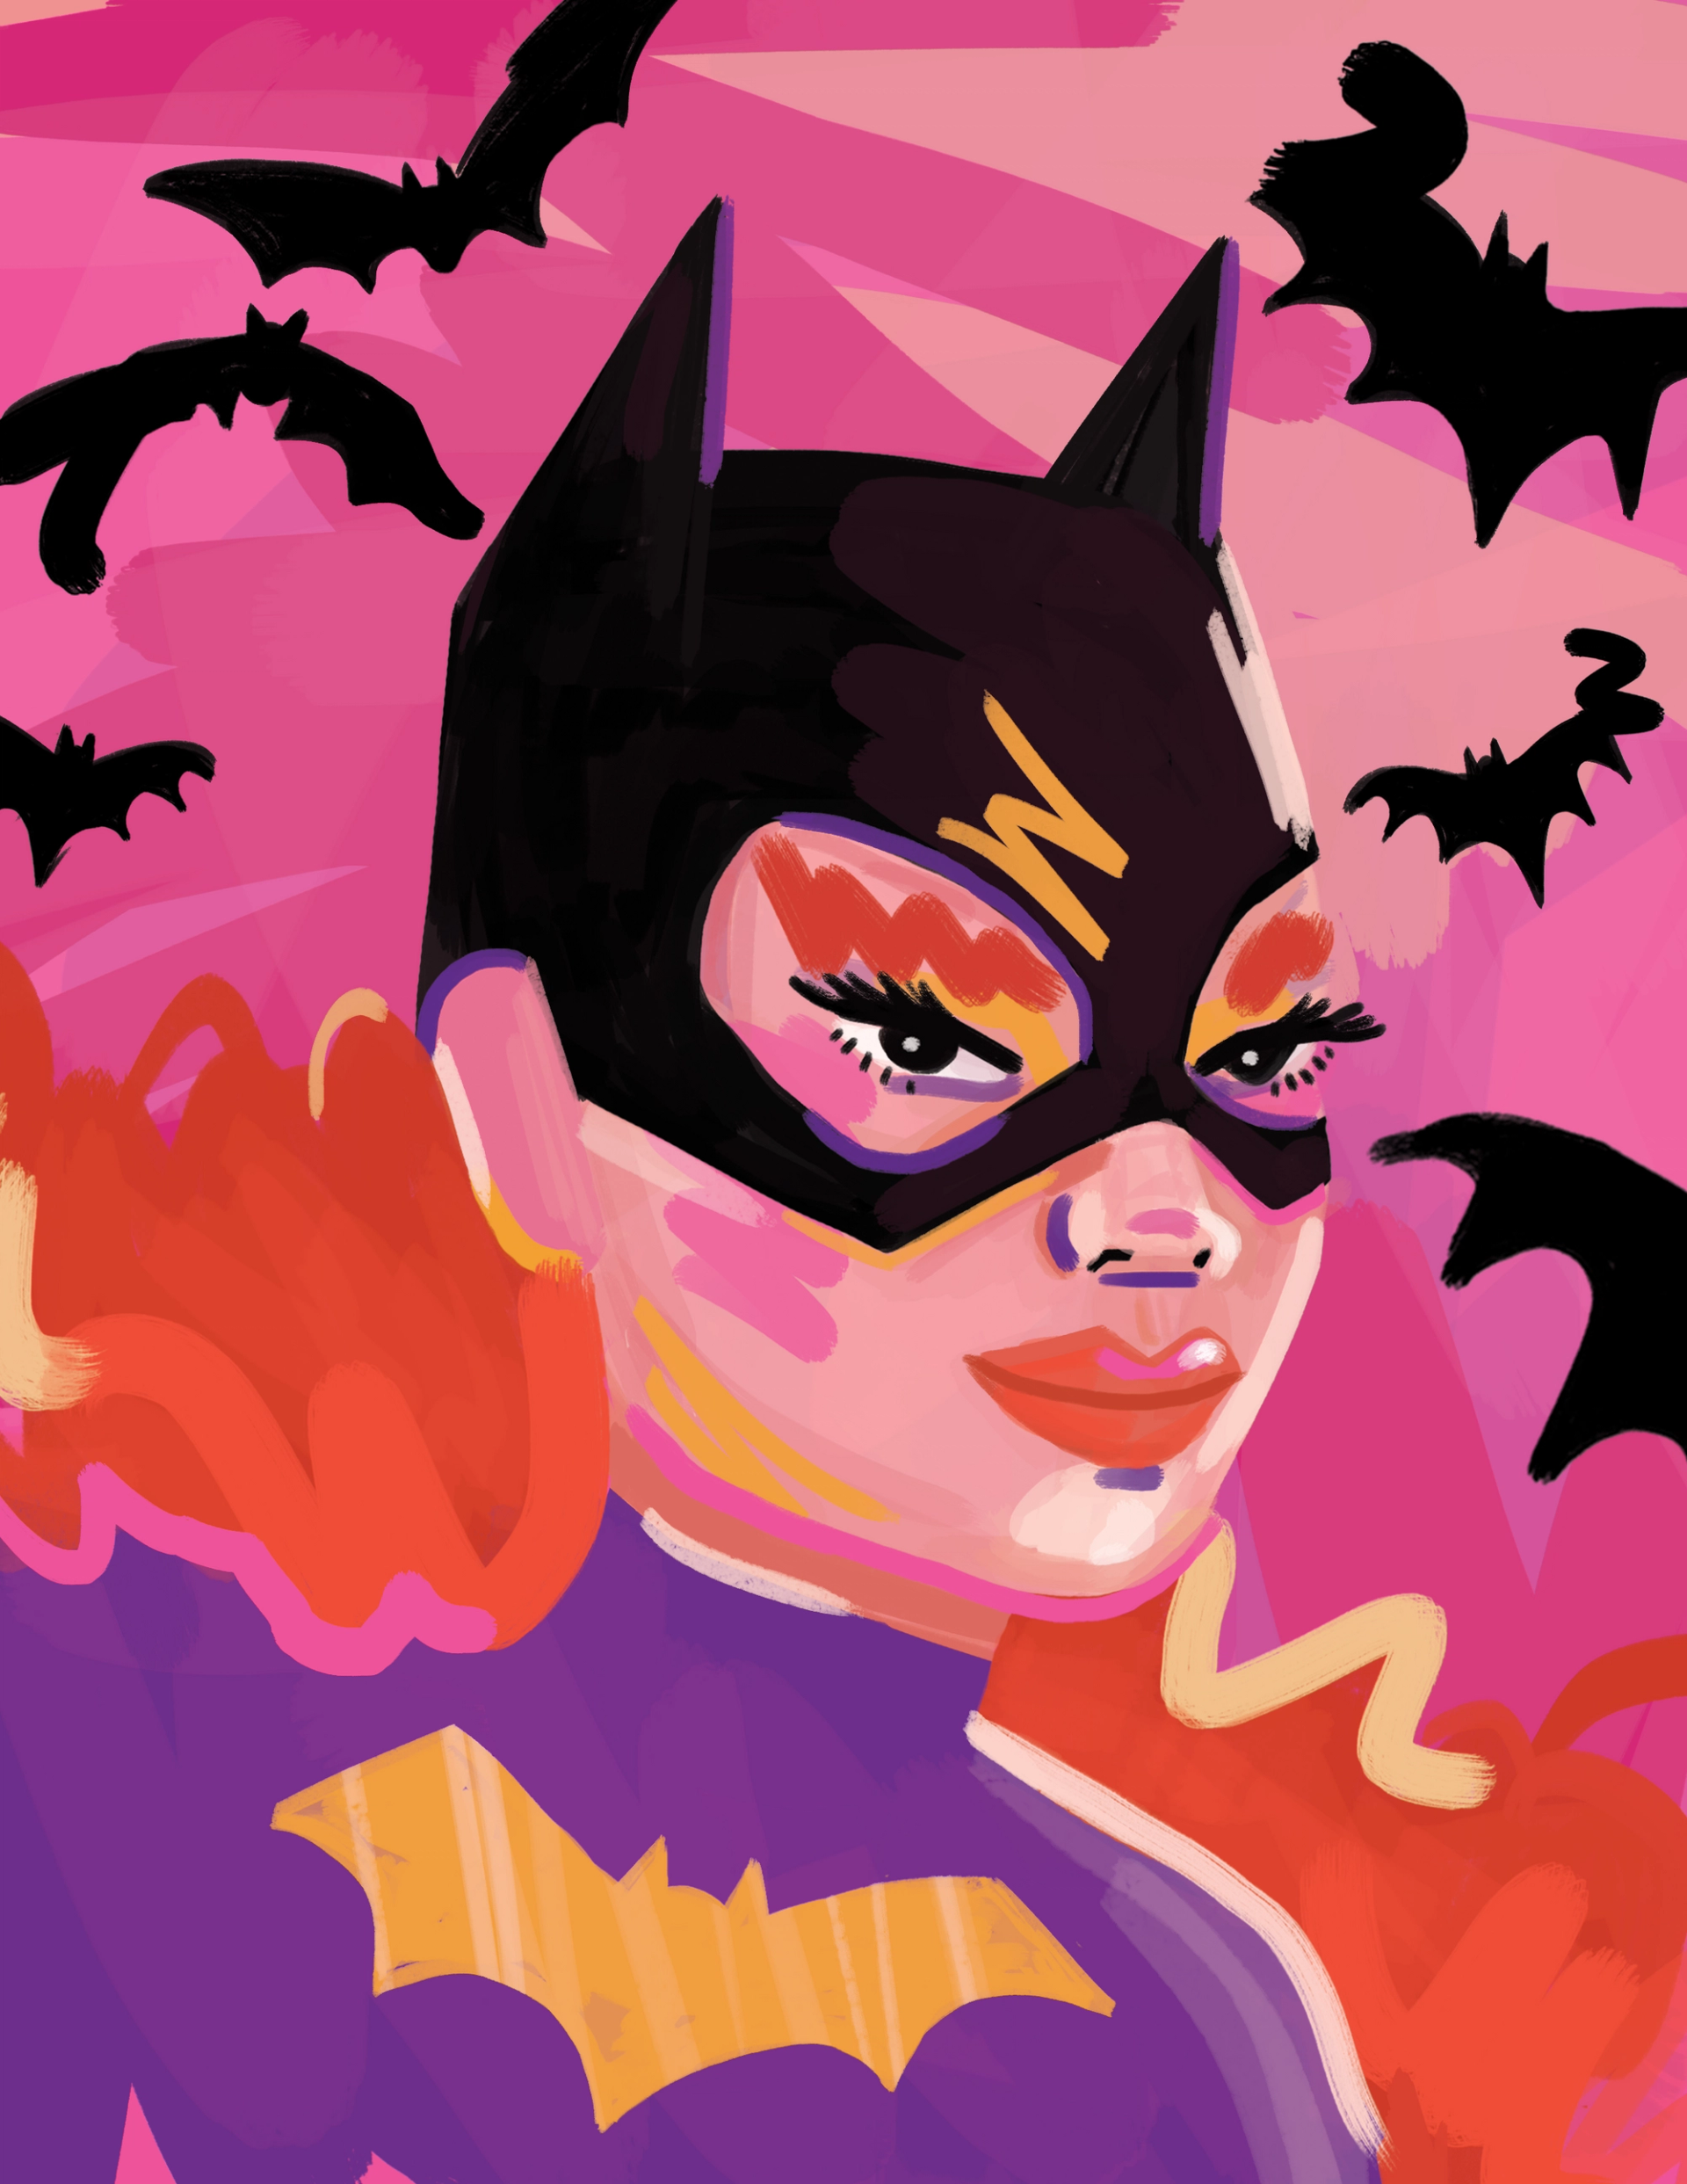 Niege Borges illustrated 'Batgirl' for Warner Bros. 100 anniversary celebrations